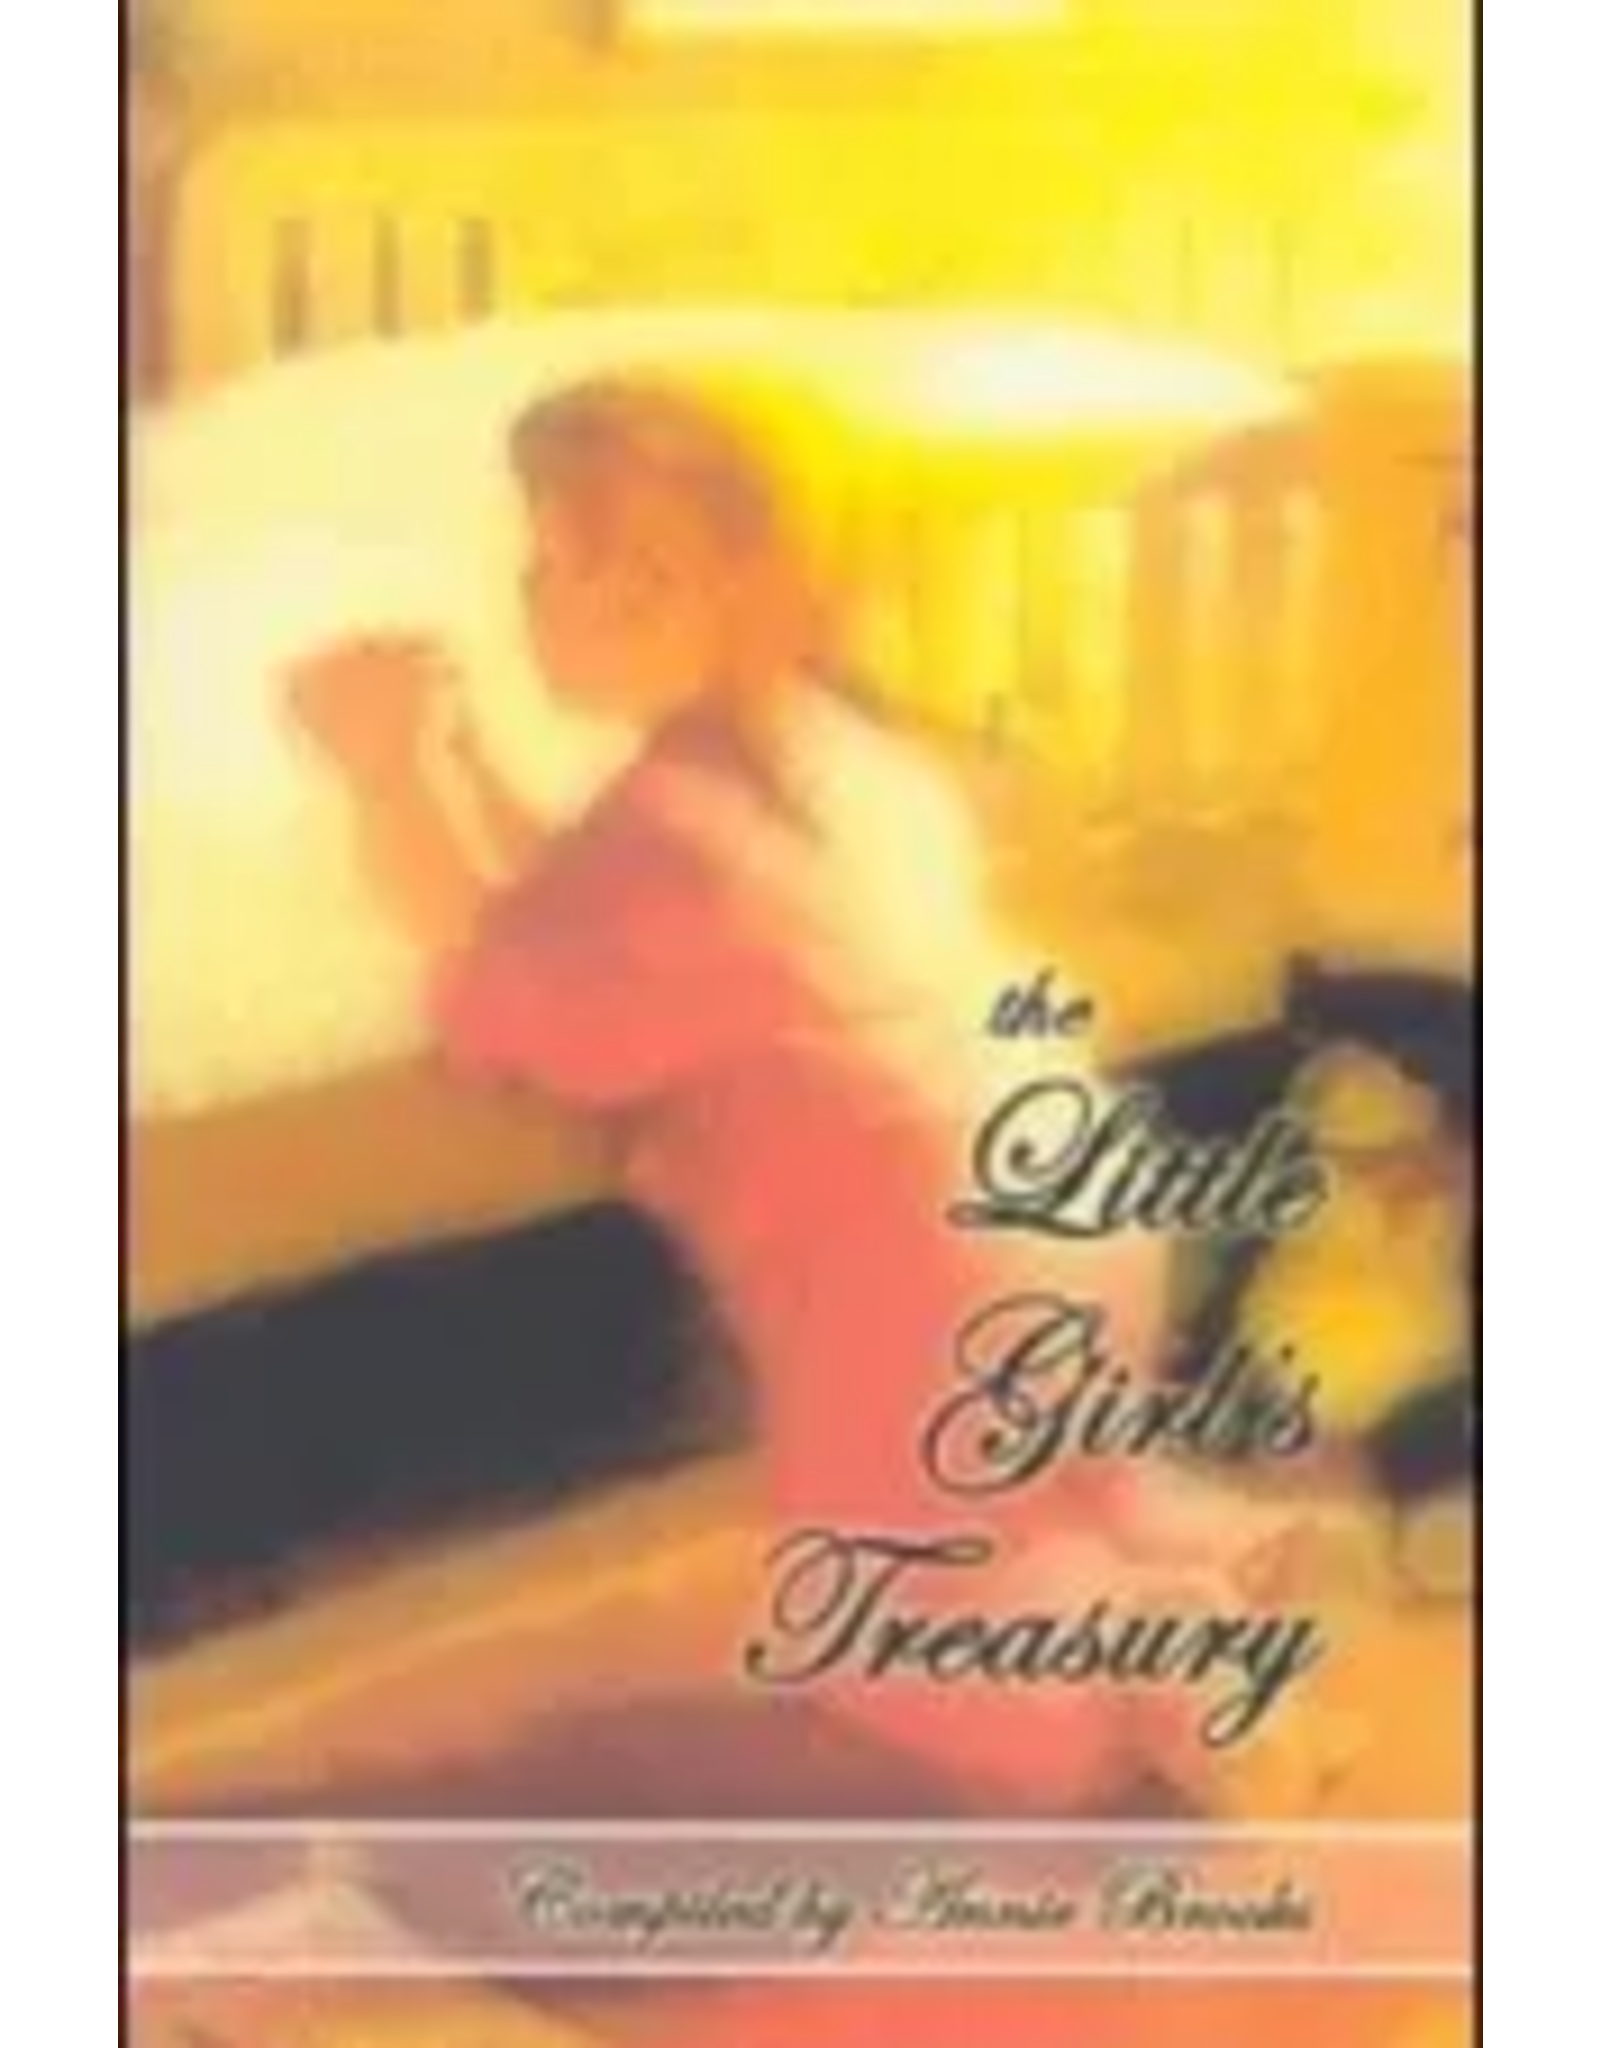 Annie Brooks The Little Girl's Treasury